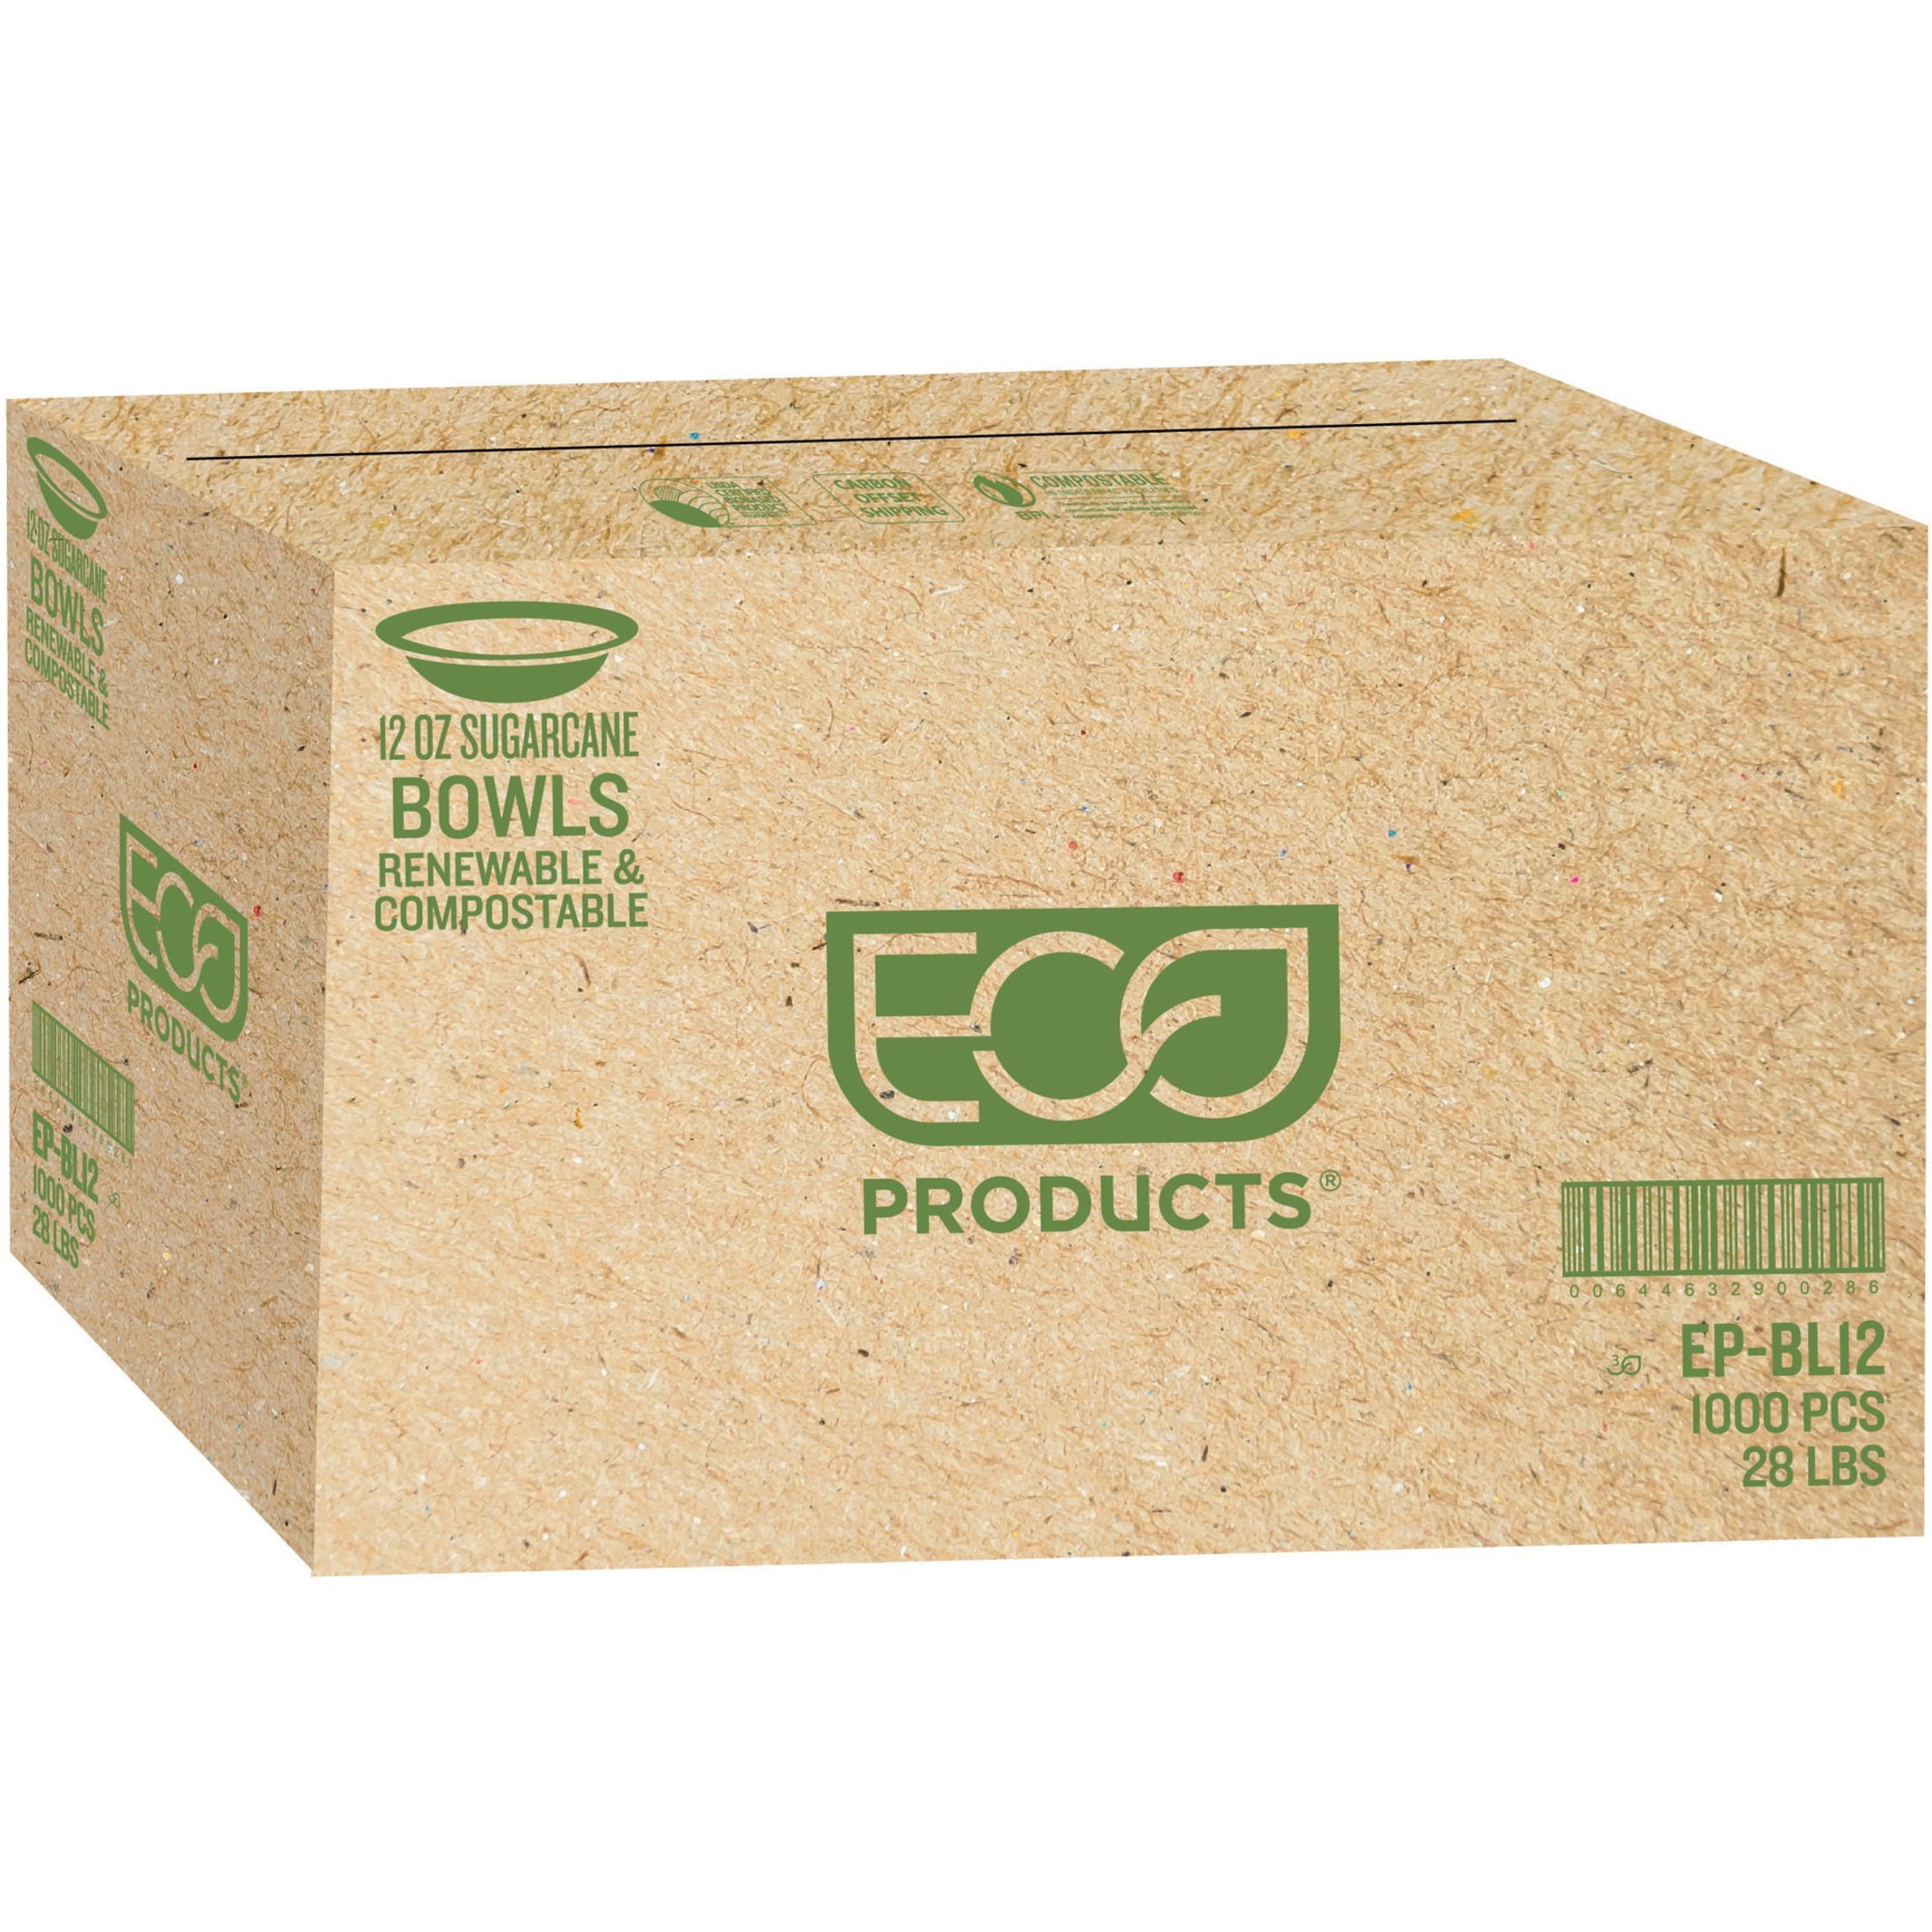 Eco-Products EP-BL12 12 oz Renewable & Compostable Sugarcane Bowls 